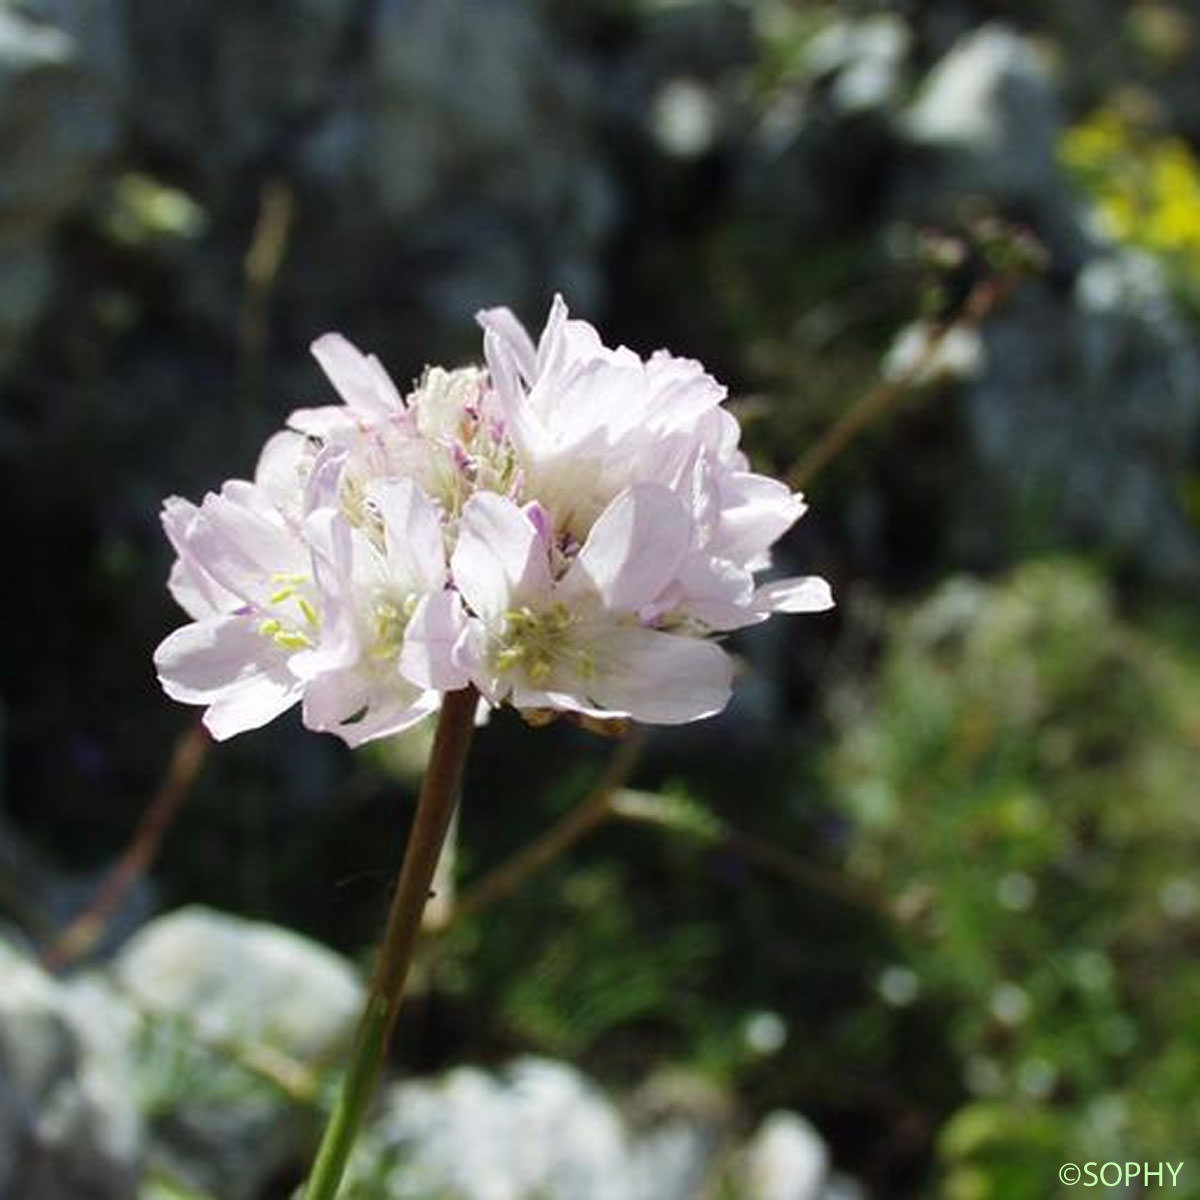 Arméria des sables - Armeria arenaria subsp. arenaria